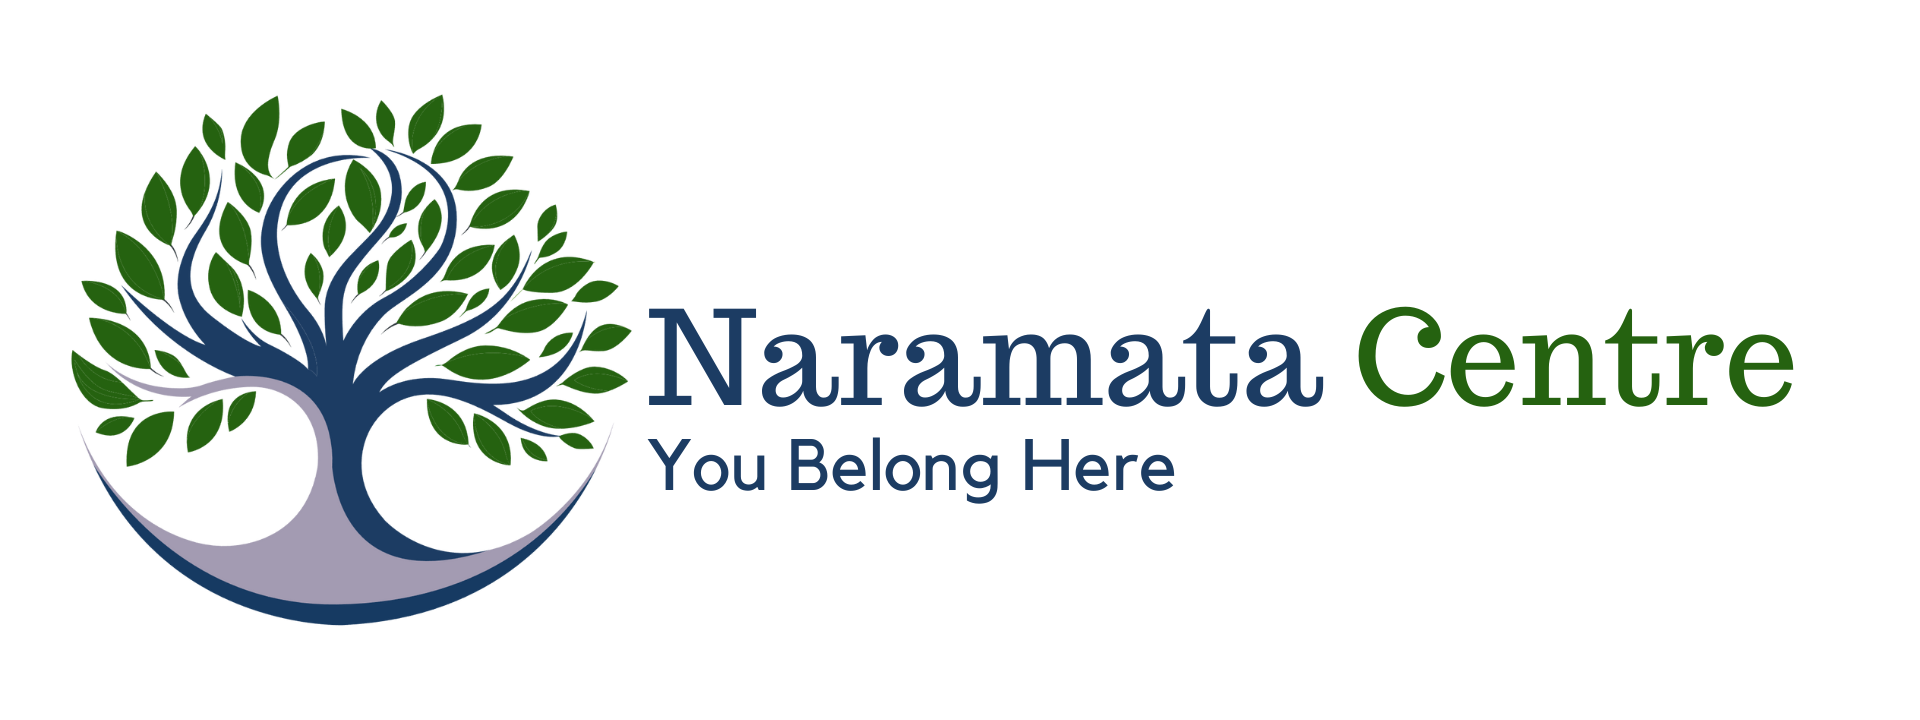 Naramata Centre logo